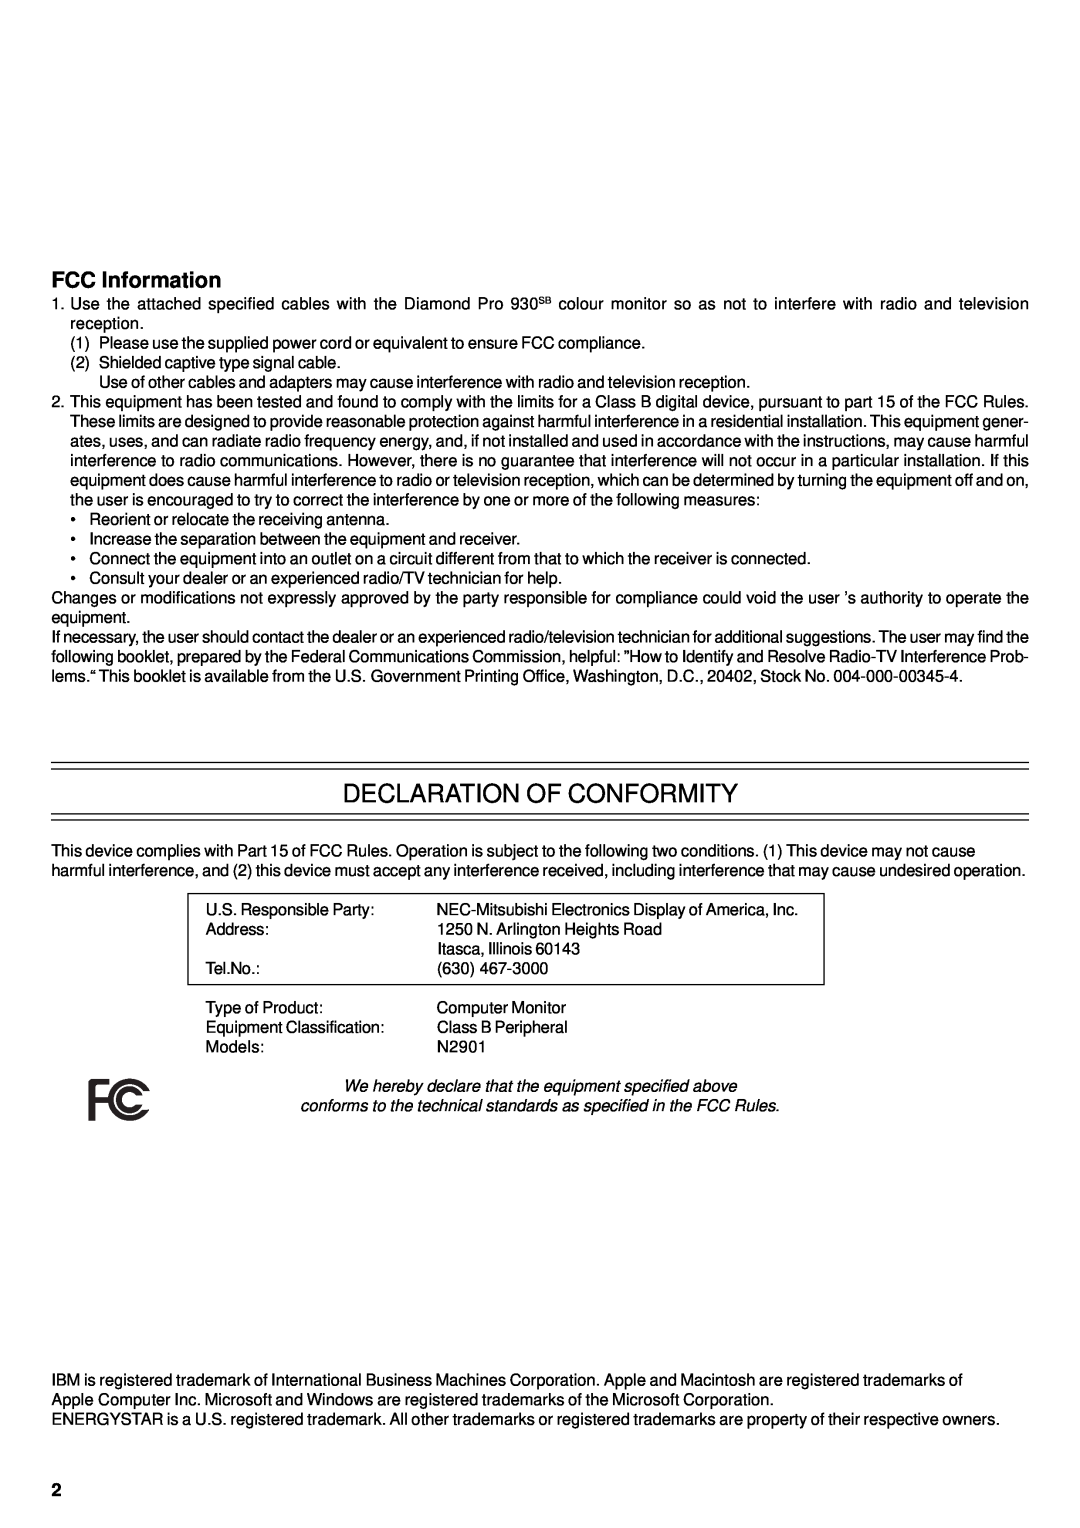 Mitsubishi Electronics Pro 930SB user manual Declaration Of Conformity, FCC Information 